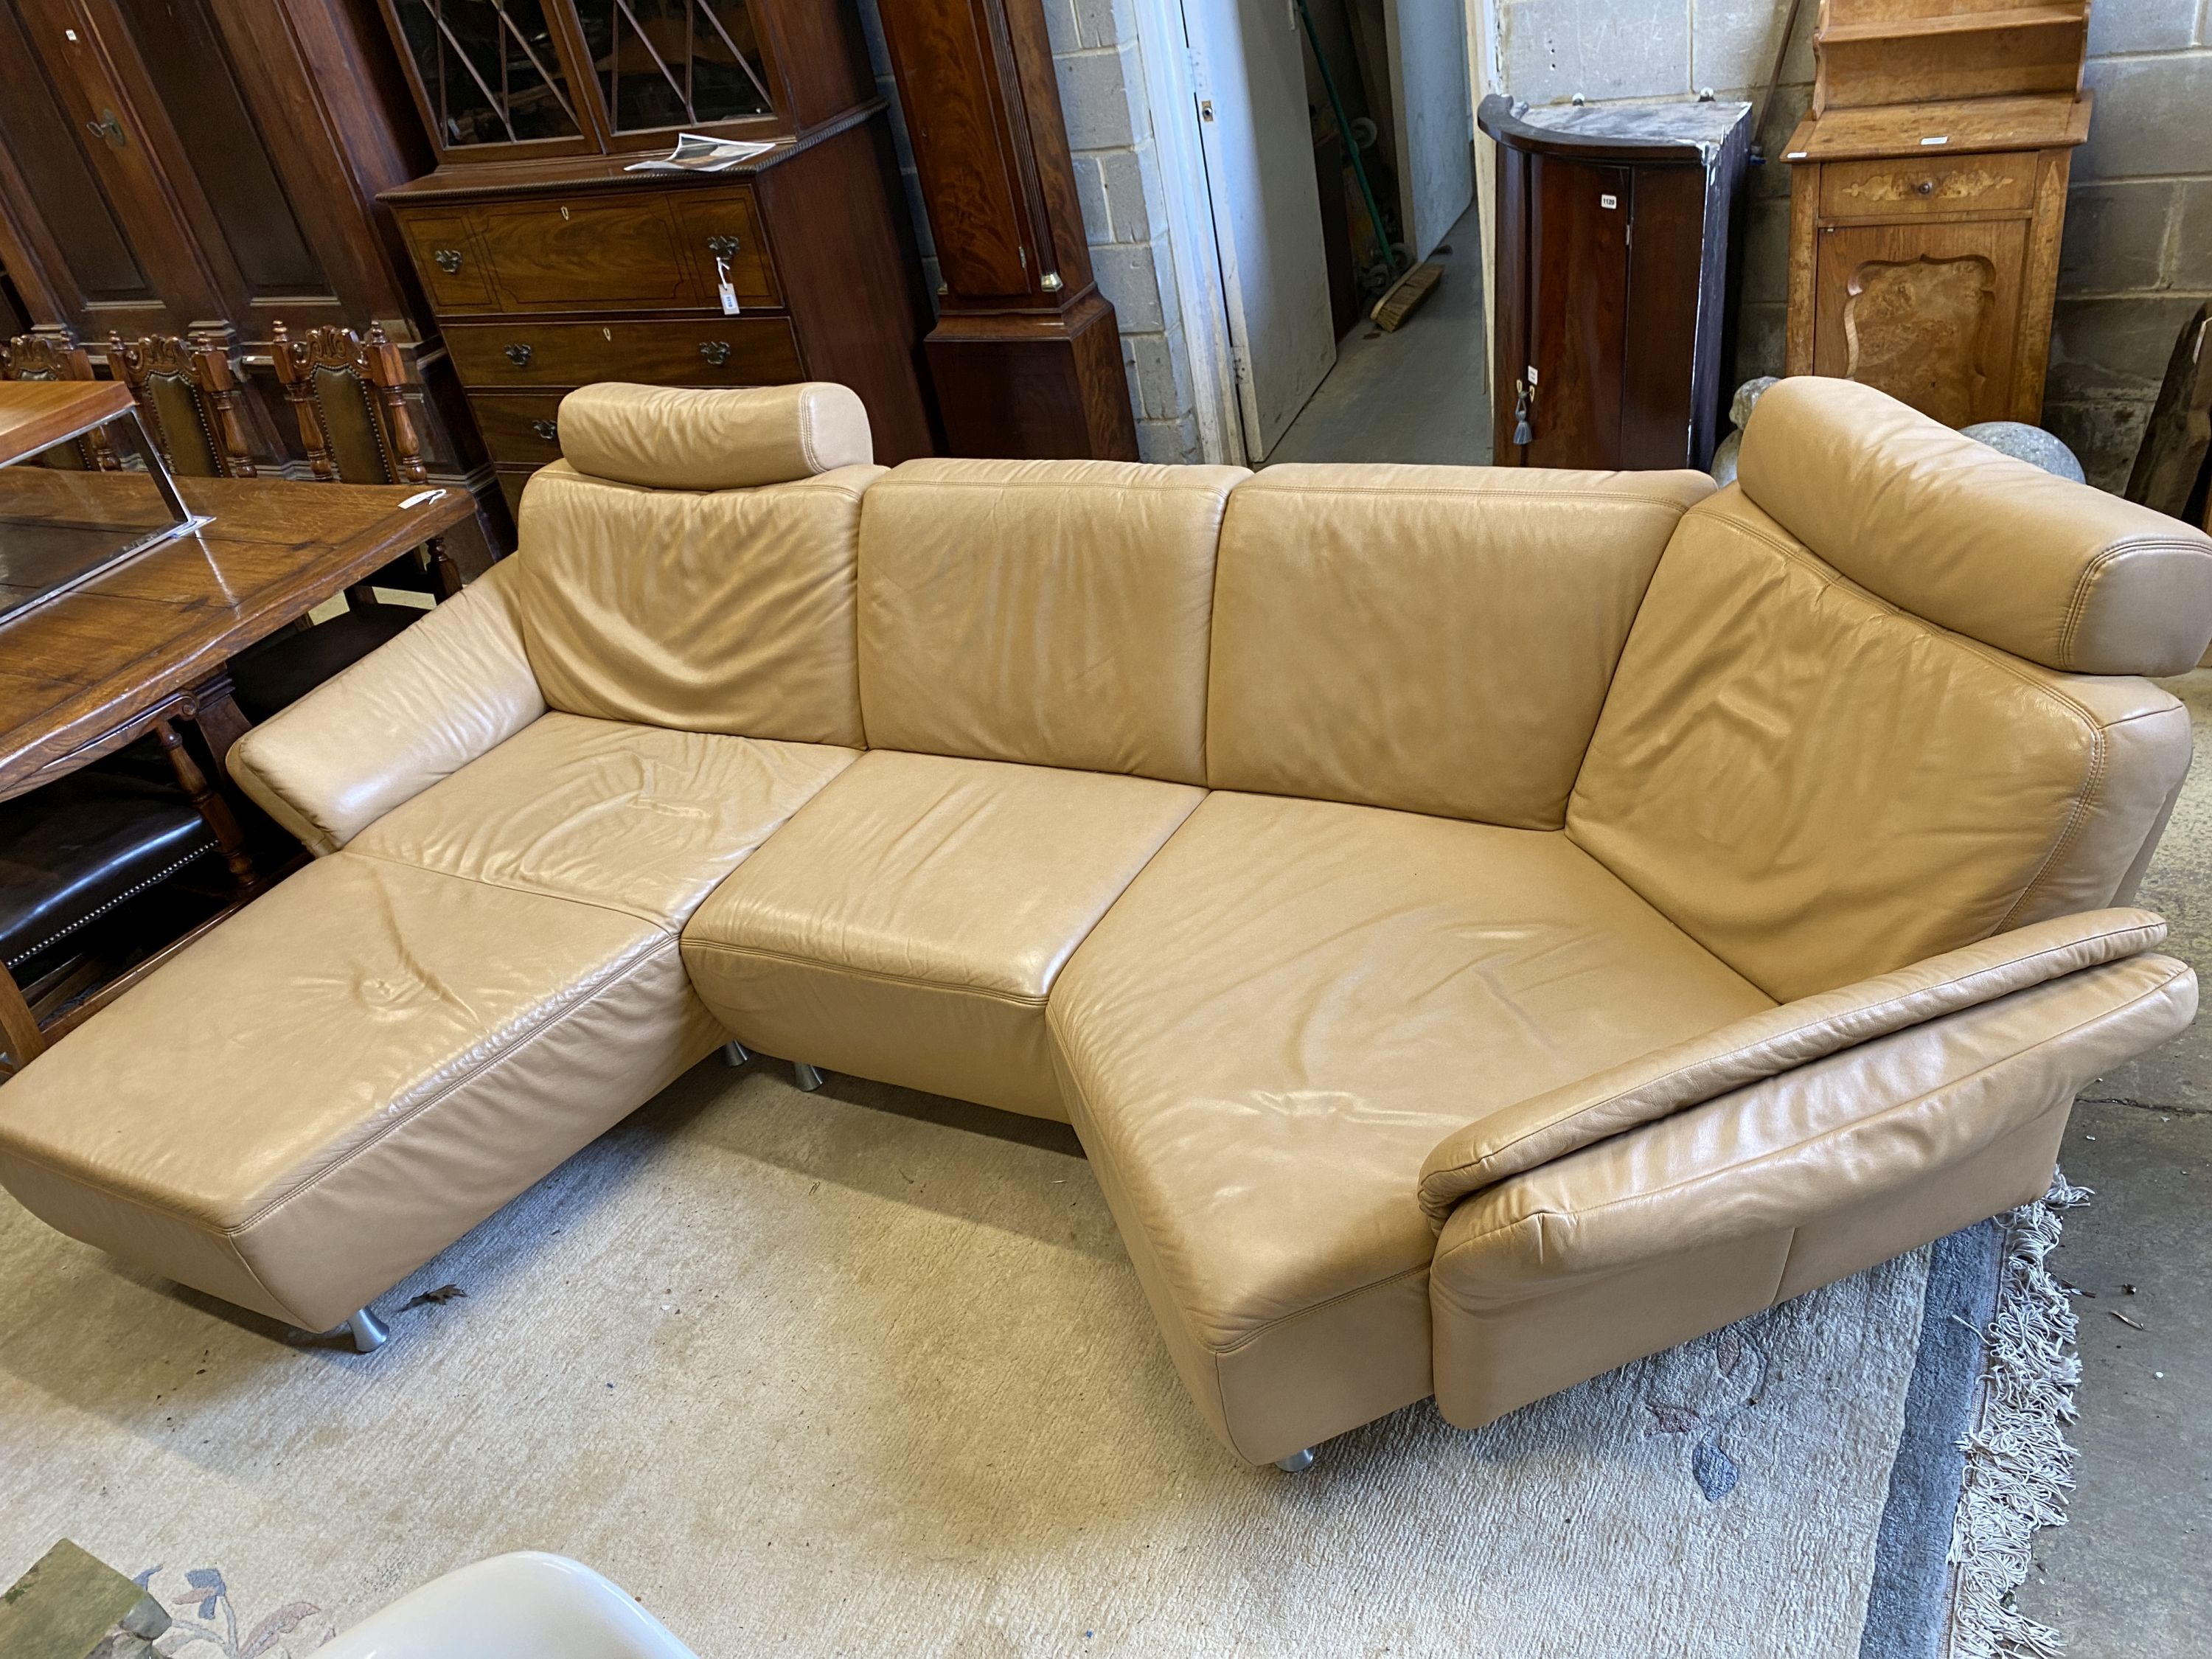 An Italian beige leather curved corner sofa, length 250cm, maximum width 160cm, height 90cm